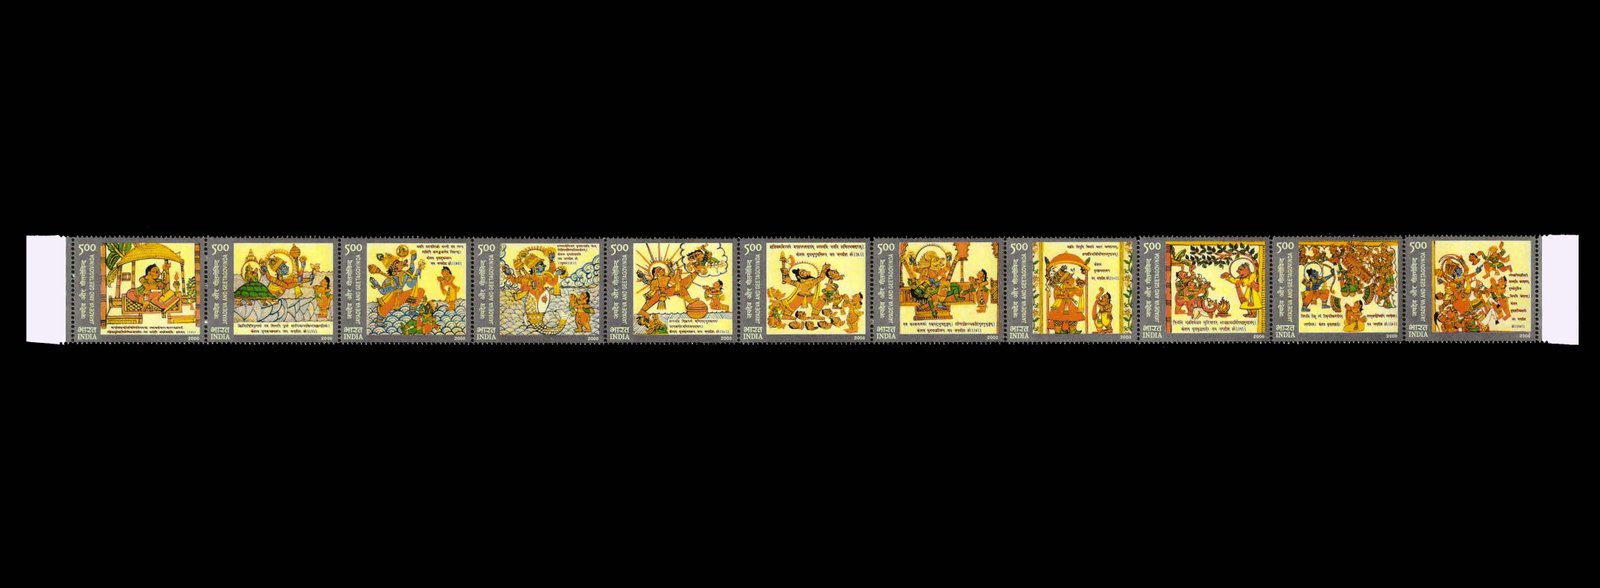 INDIA 2009 - Jayadeva and Geetagovinda (Sanskrit Verse), Horizontal Setenant Strip of 11 Stamps, MNH